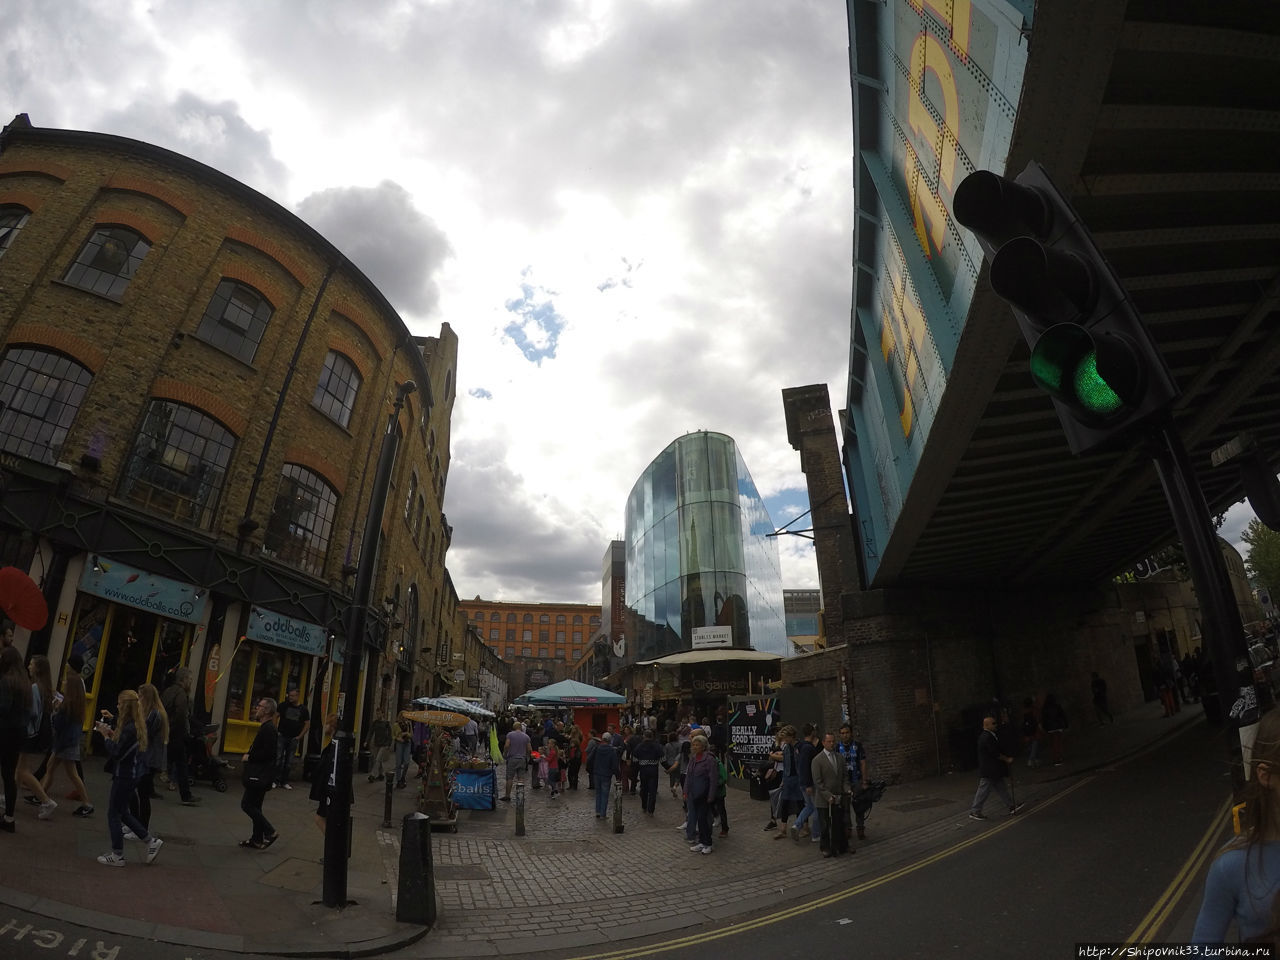 Лондон, Камден маркет — больше чем шопинг Лондон, Великобритания